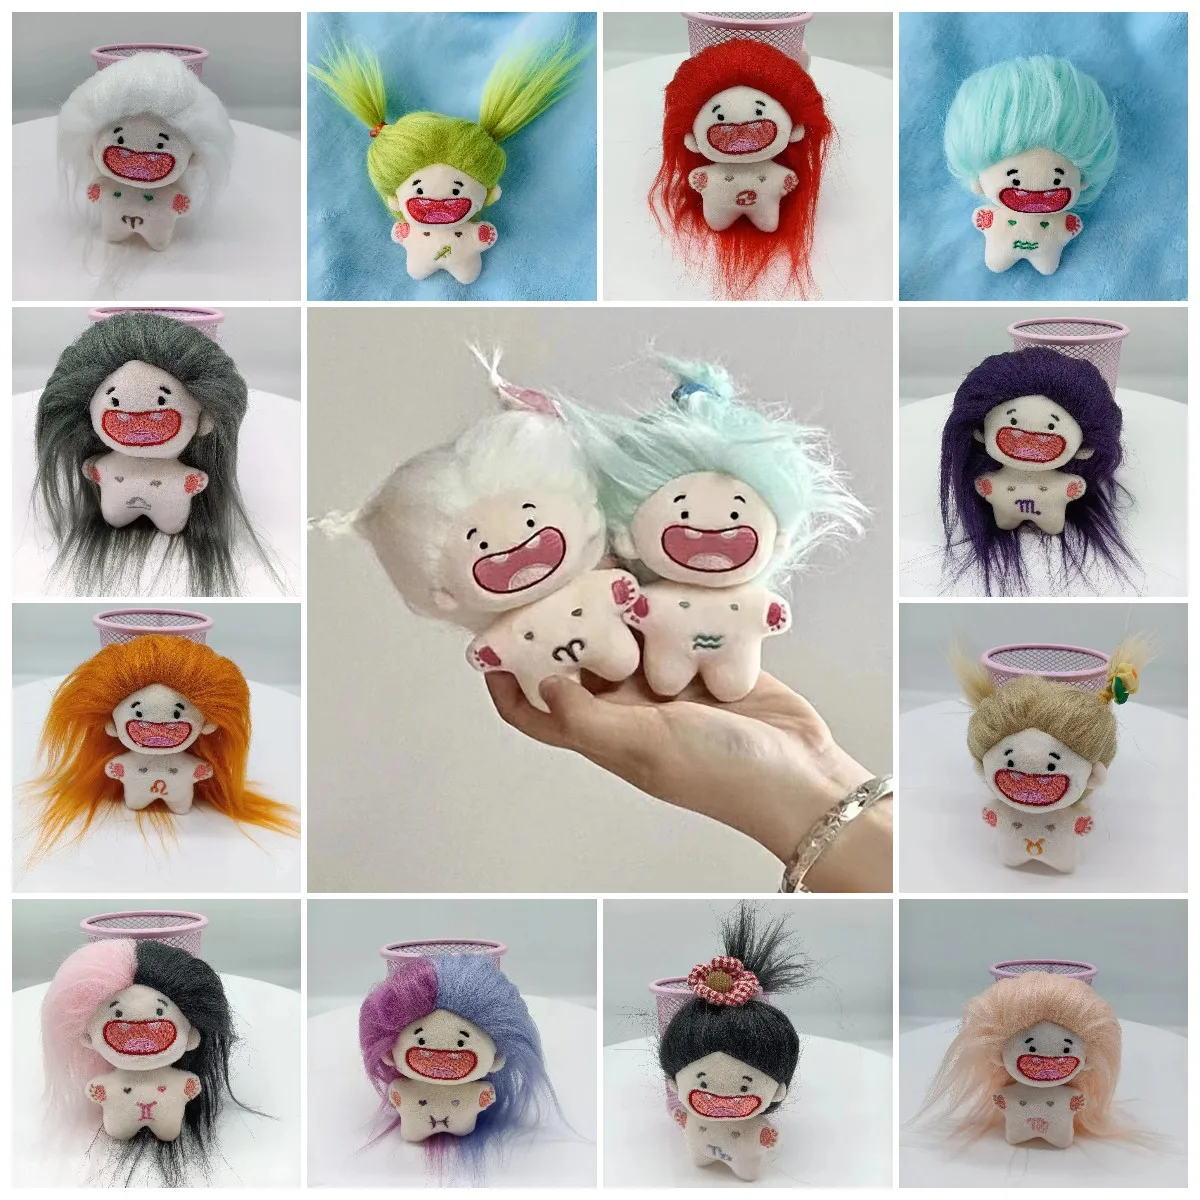 10cm/4in Kawaii Mini Doll Anime Plush Star Dolls Stuffed Customization Figure Toys Cotton Baby Plushies Toys Children's Day Gift